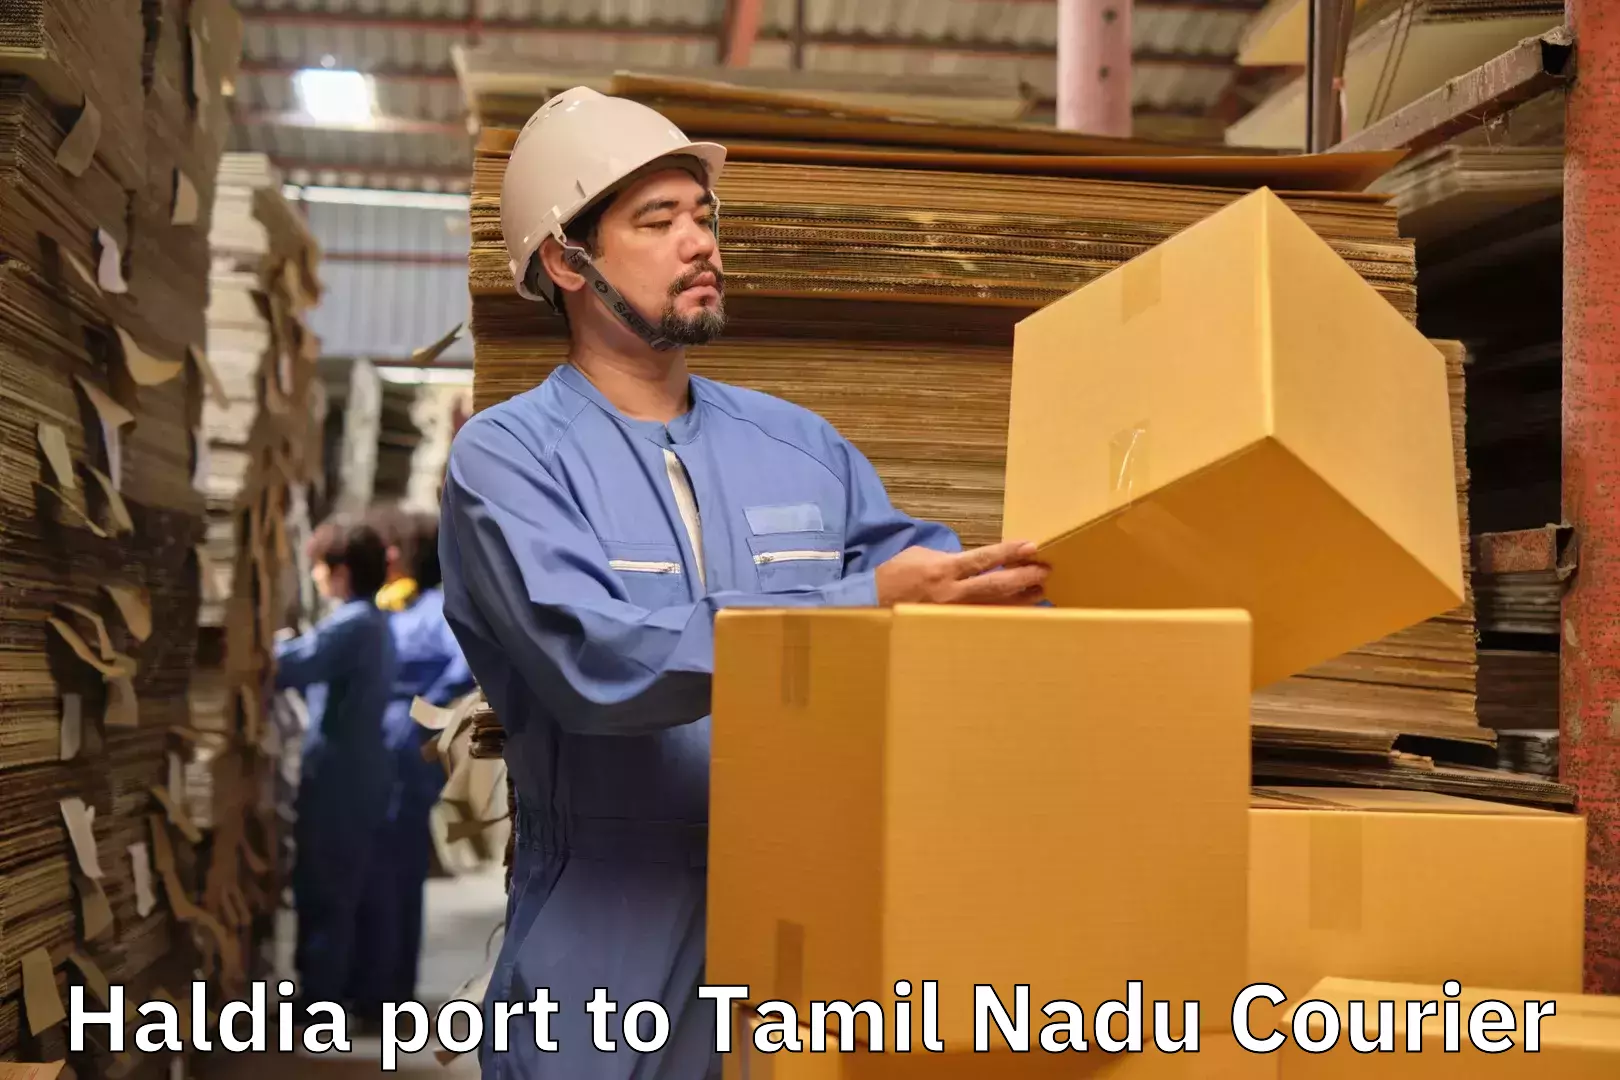 Luggage transfer service Haldia port to Ramanathapuram